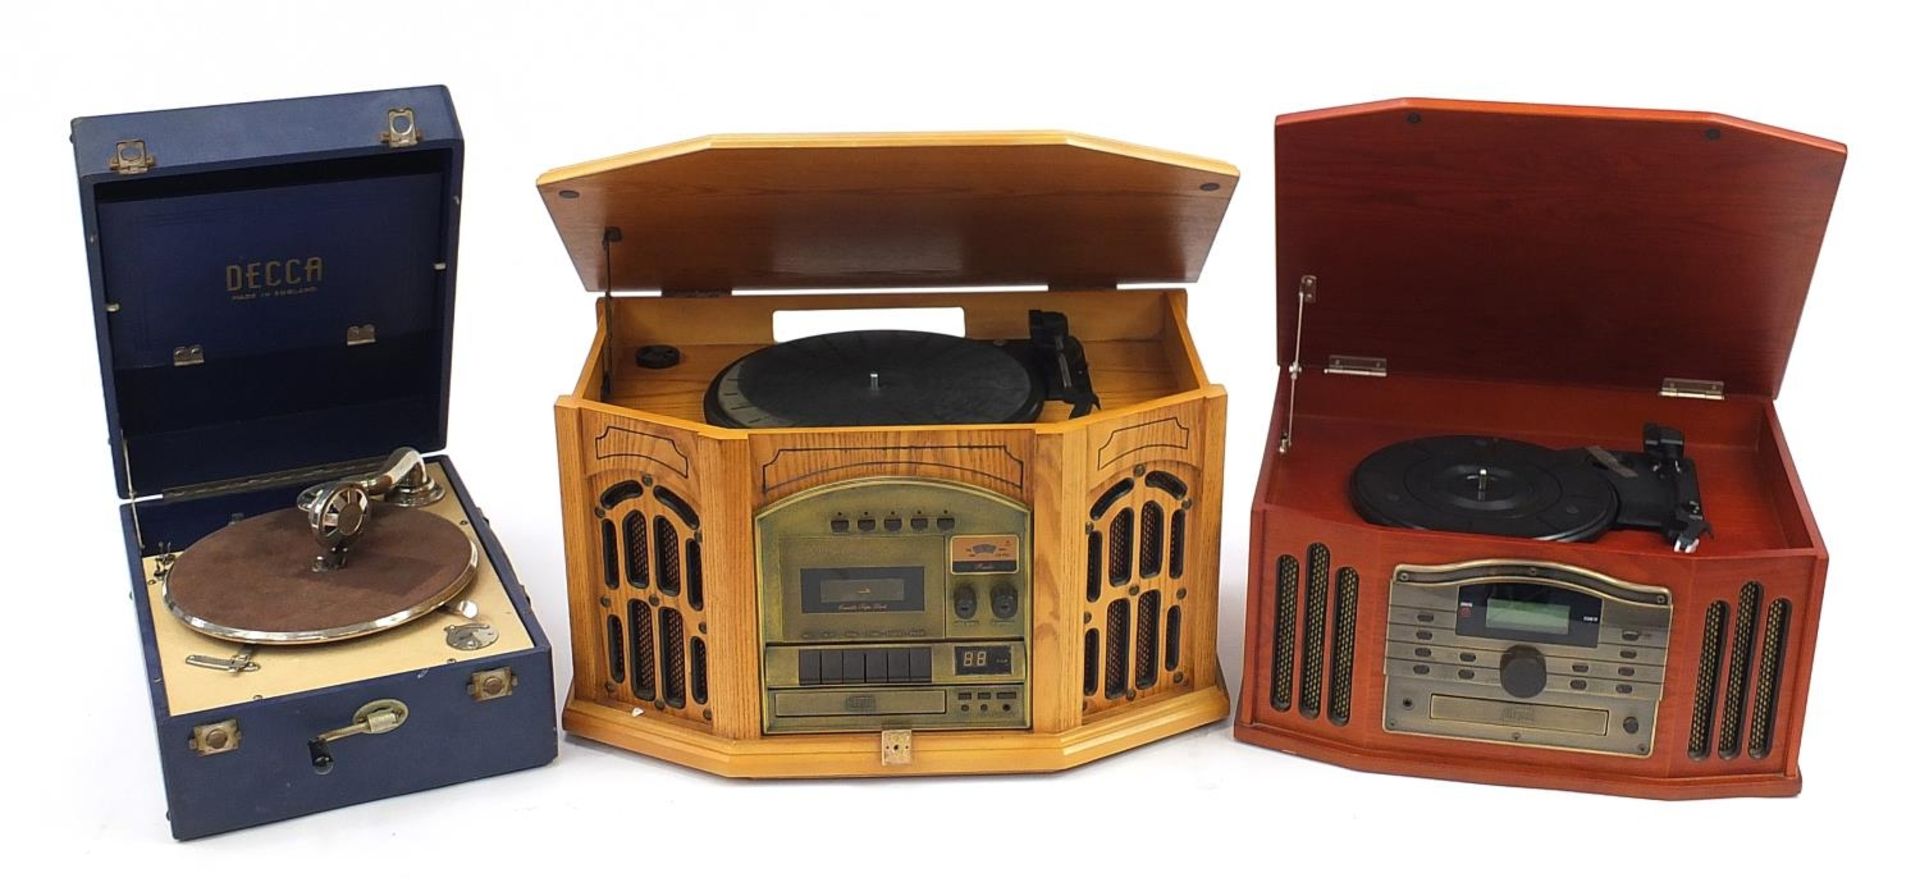 Audio equipment comprising Decca model 10 portable gramophone, Thomas Pacconi phonograph model TPC-